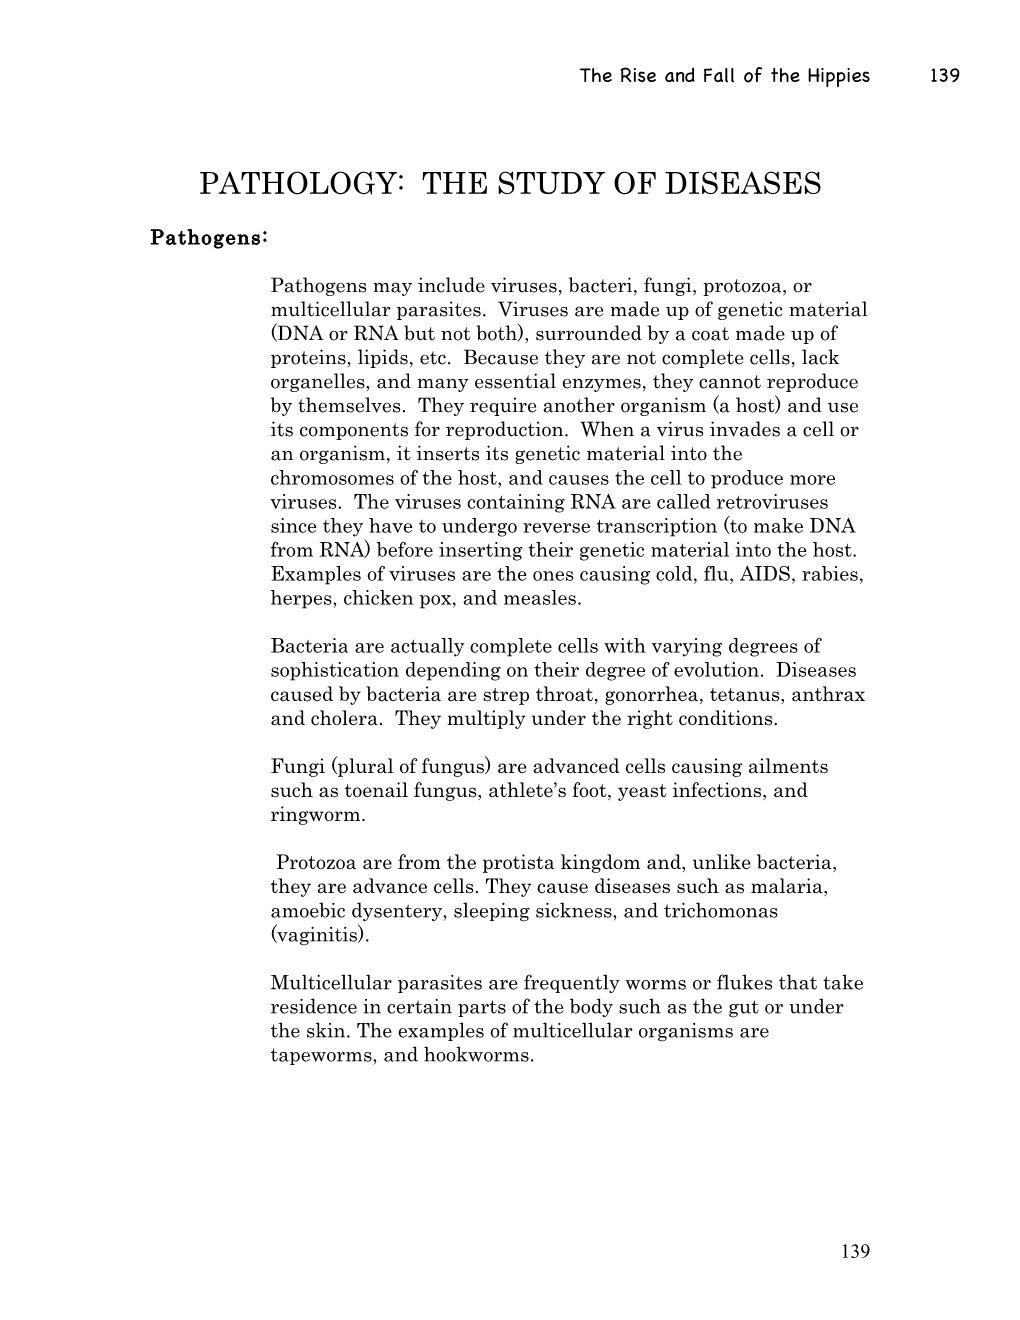 Pathology: the Study of Diseases